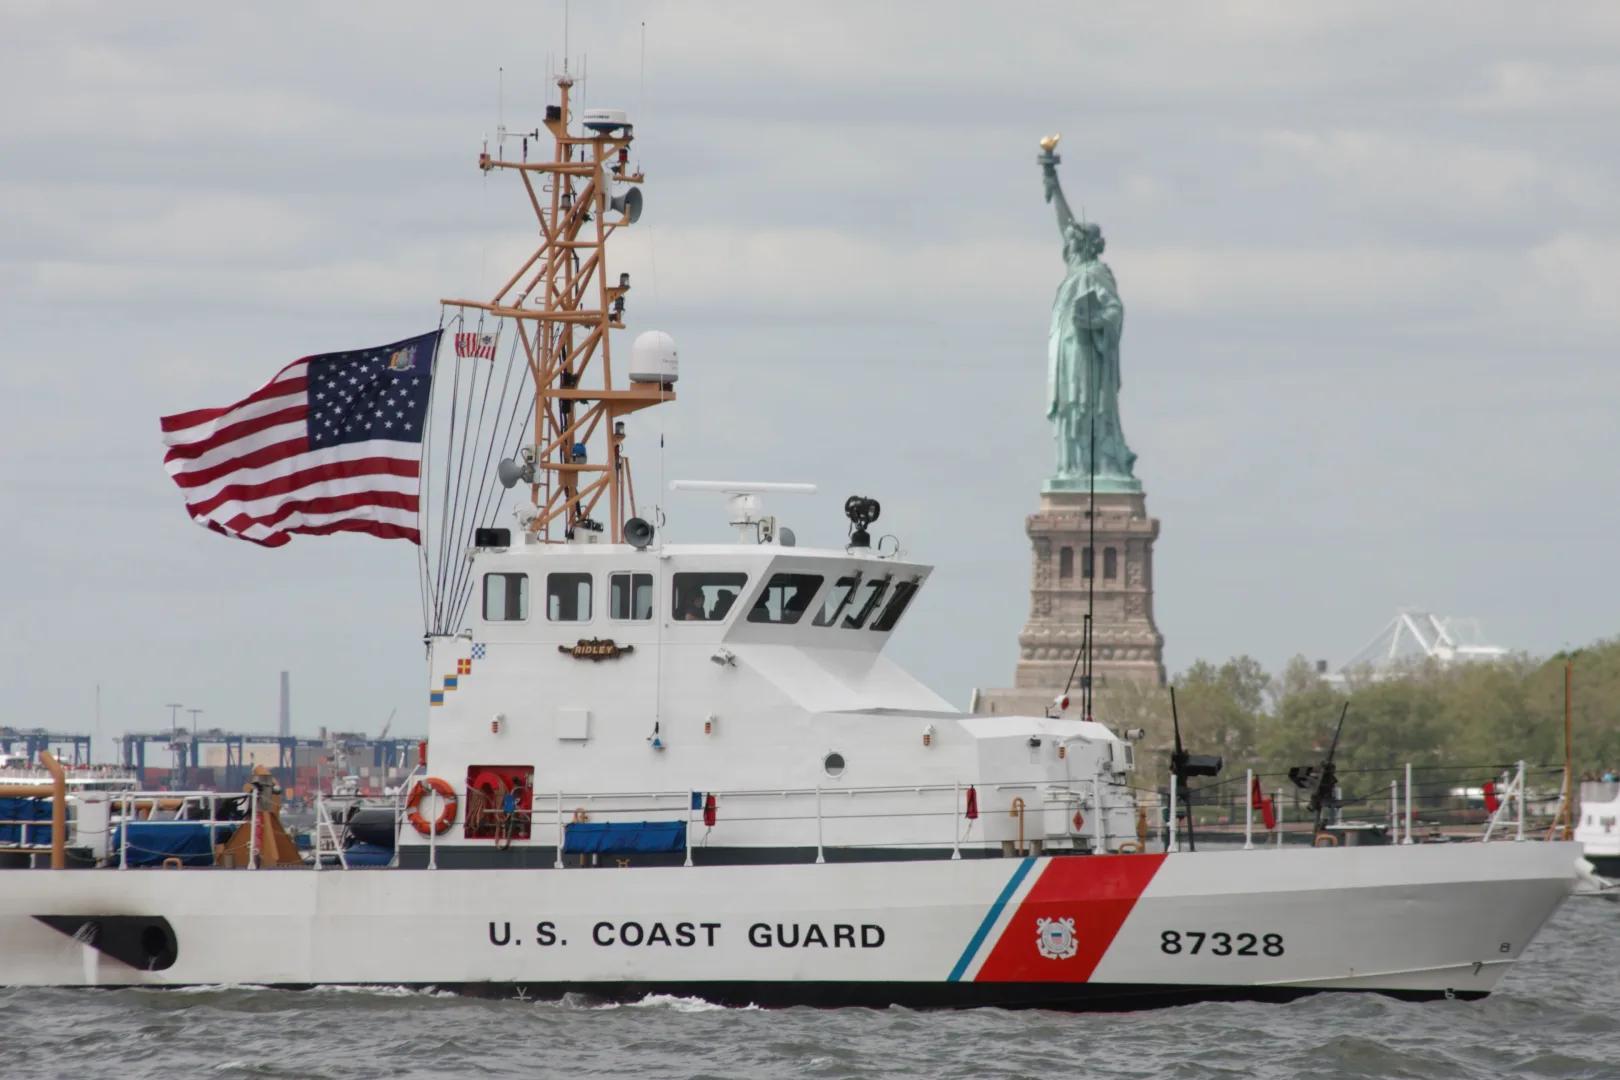 Biden thanks hero Coast Guardsman facing termination from Biden’s mandate